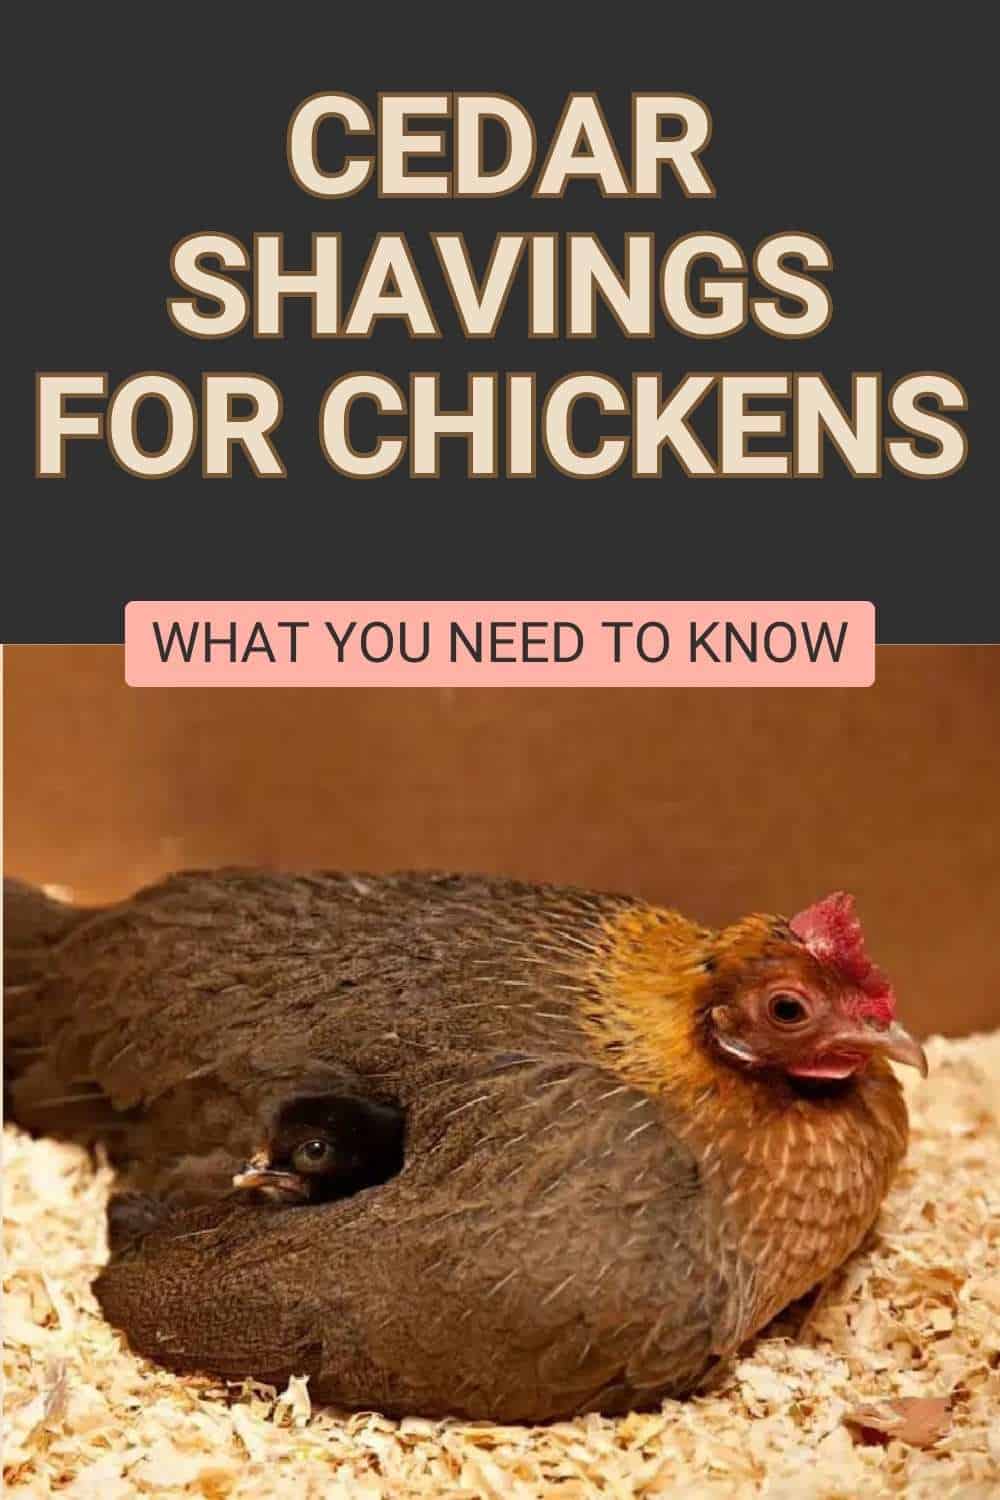 Are Cedar Shavings Safe To Use As Chicken Bedding